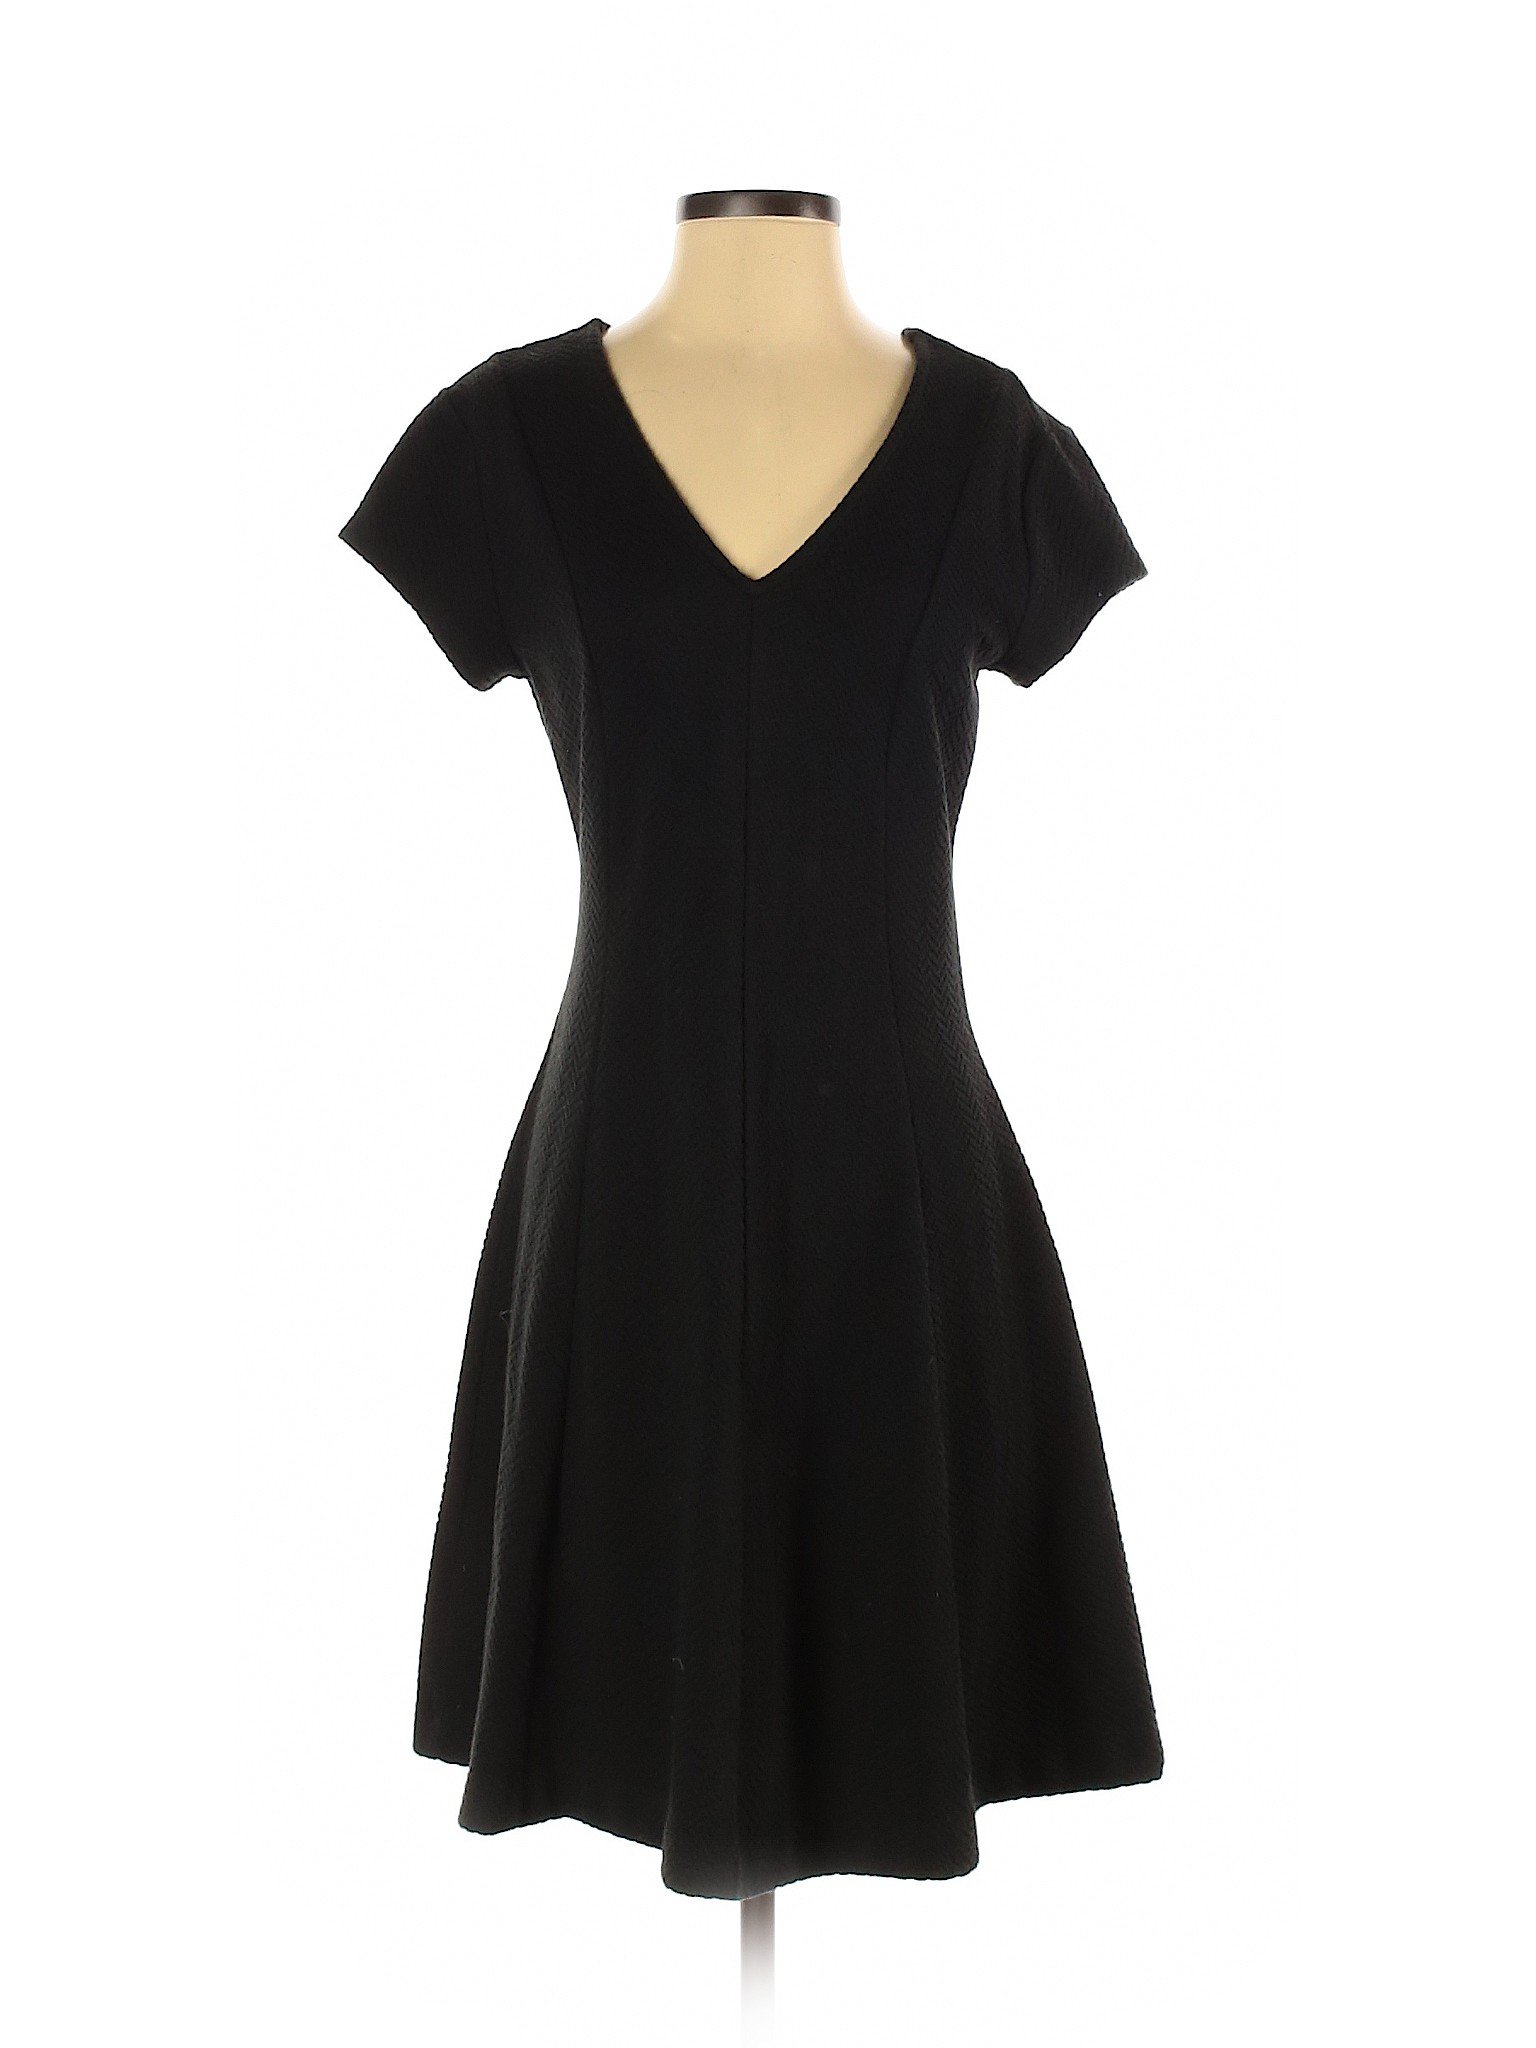 Banana Republic Factory Store Women Black Casual Dress 4 | eBay